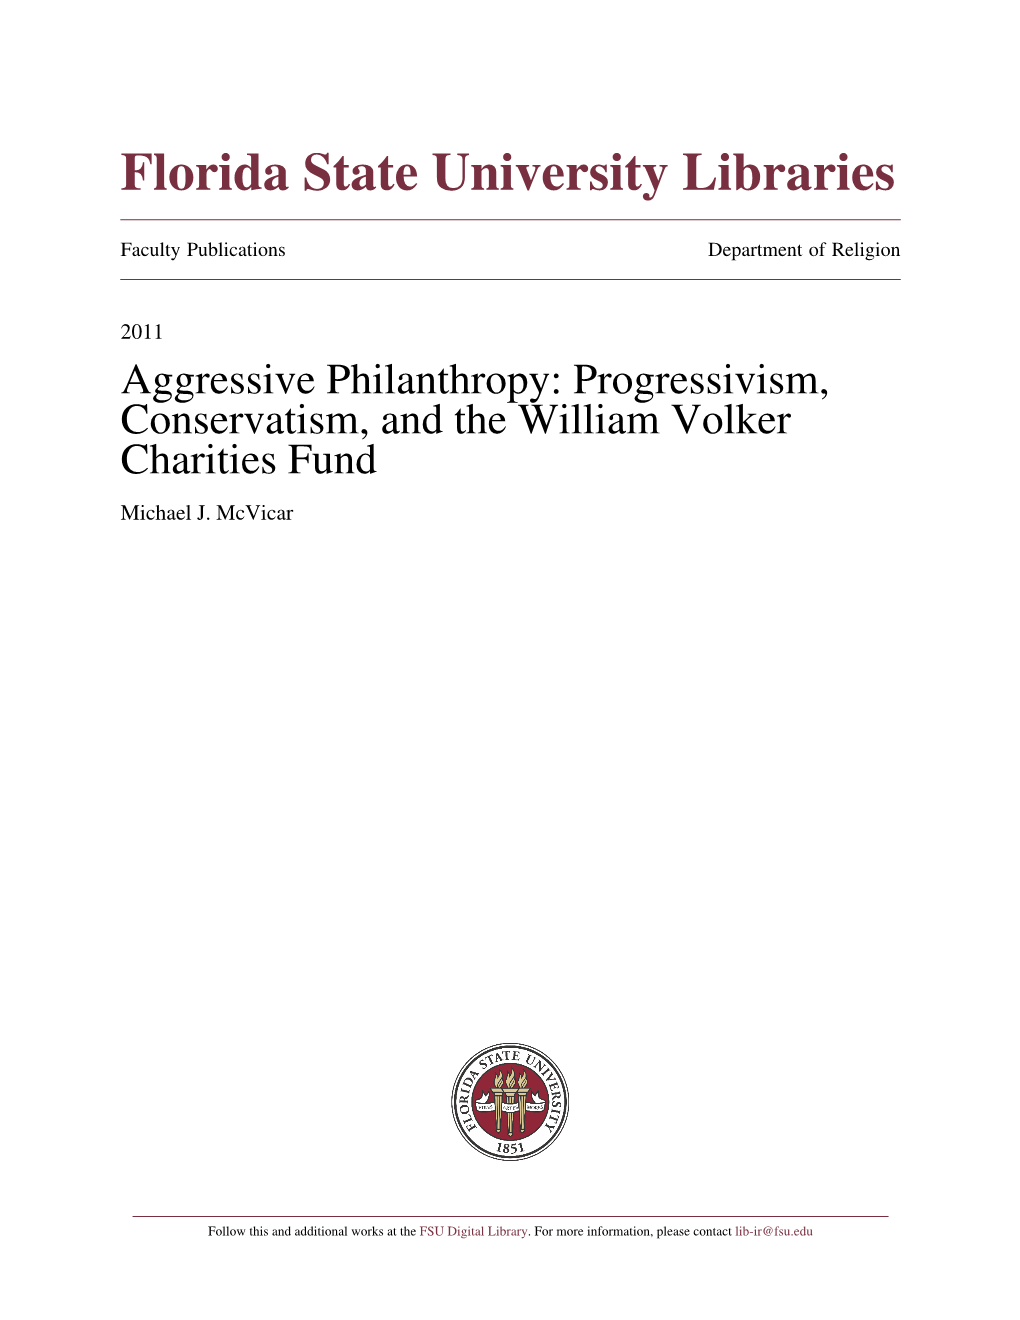 Aggressive Philanthropy: Progressivism, Conservatism, and the William Volker Charities Fund Michael J